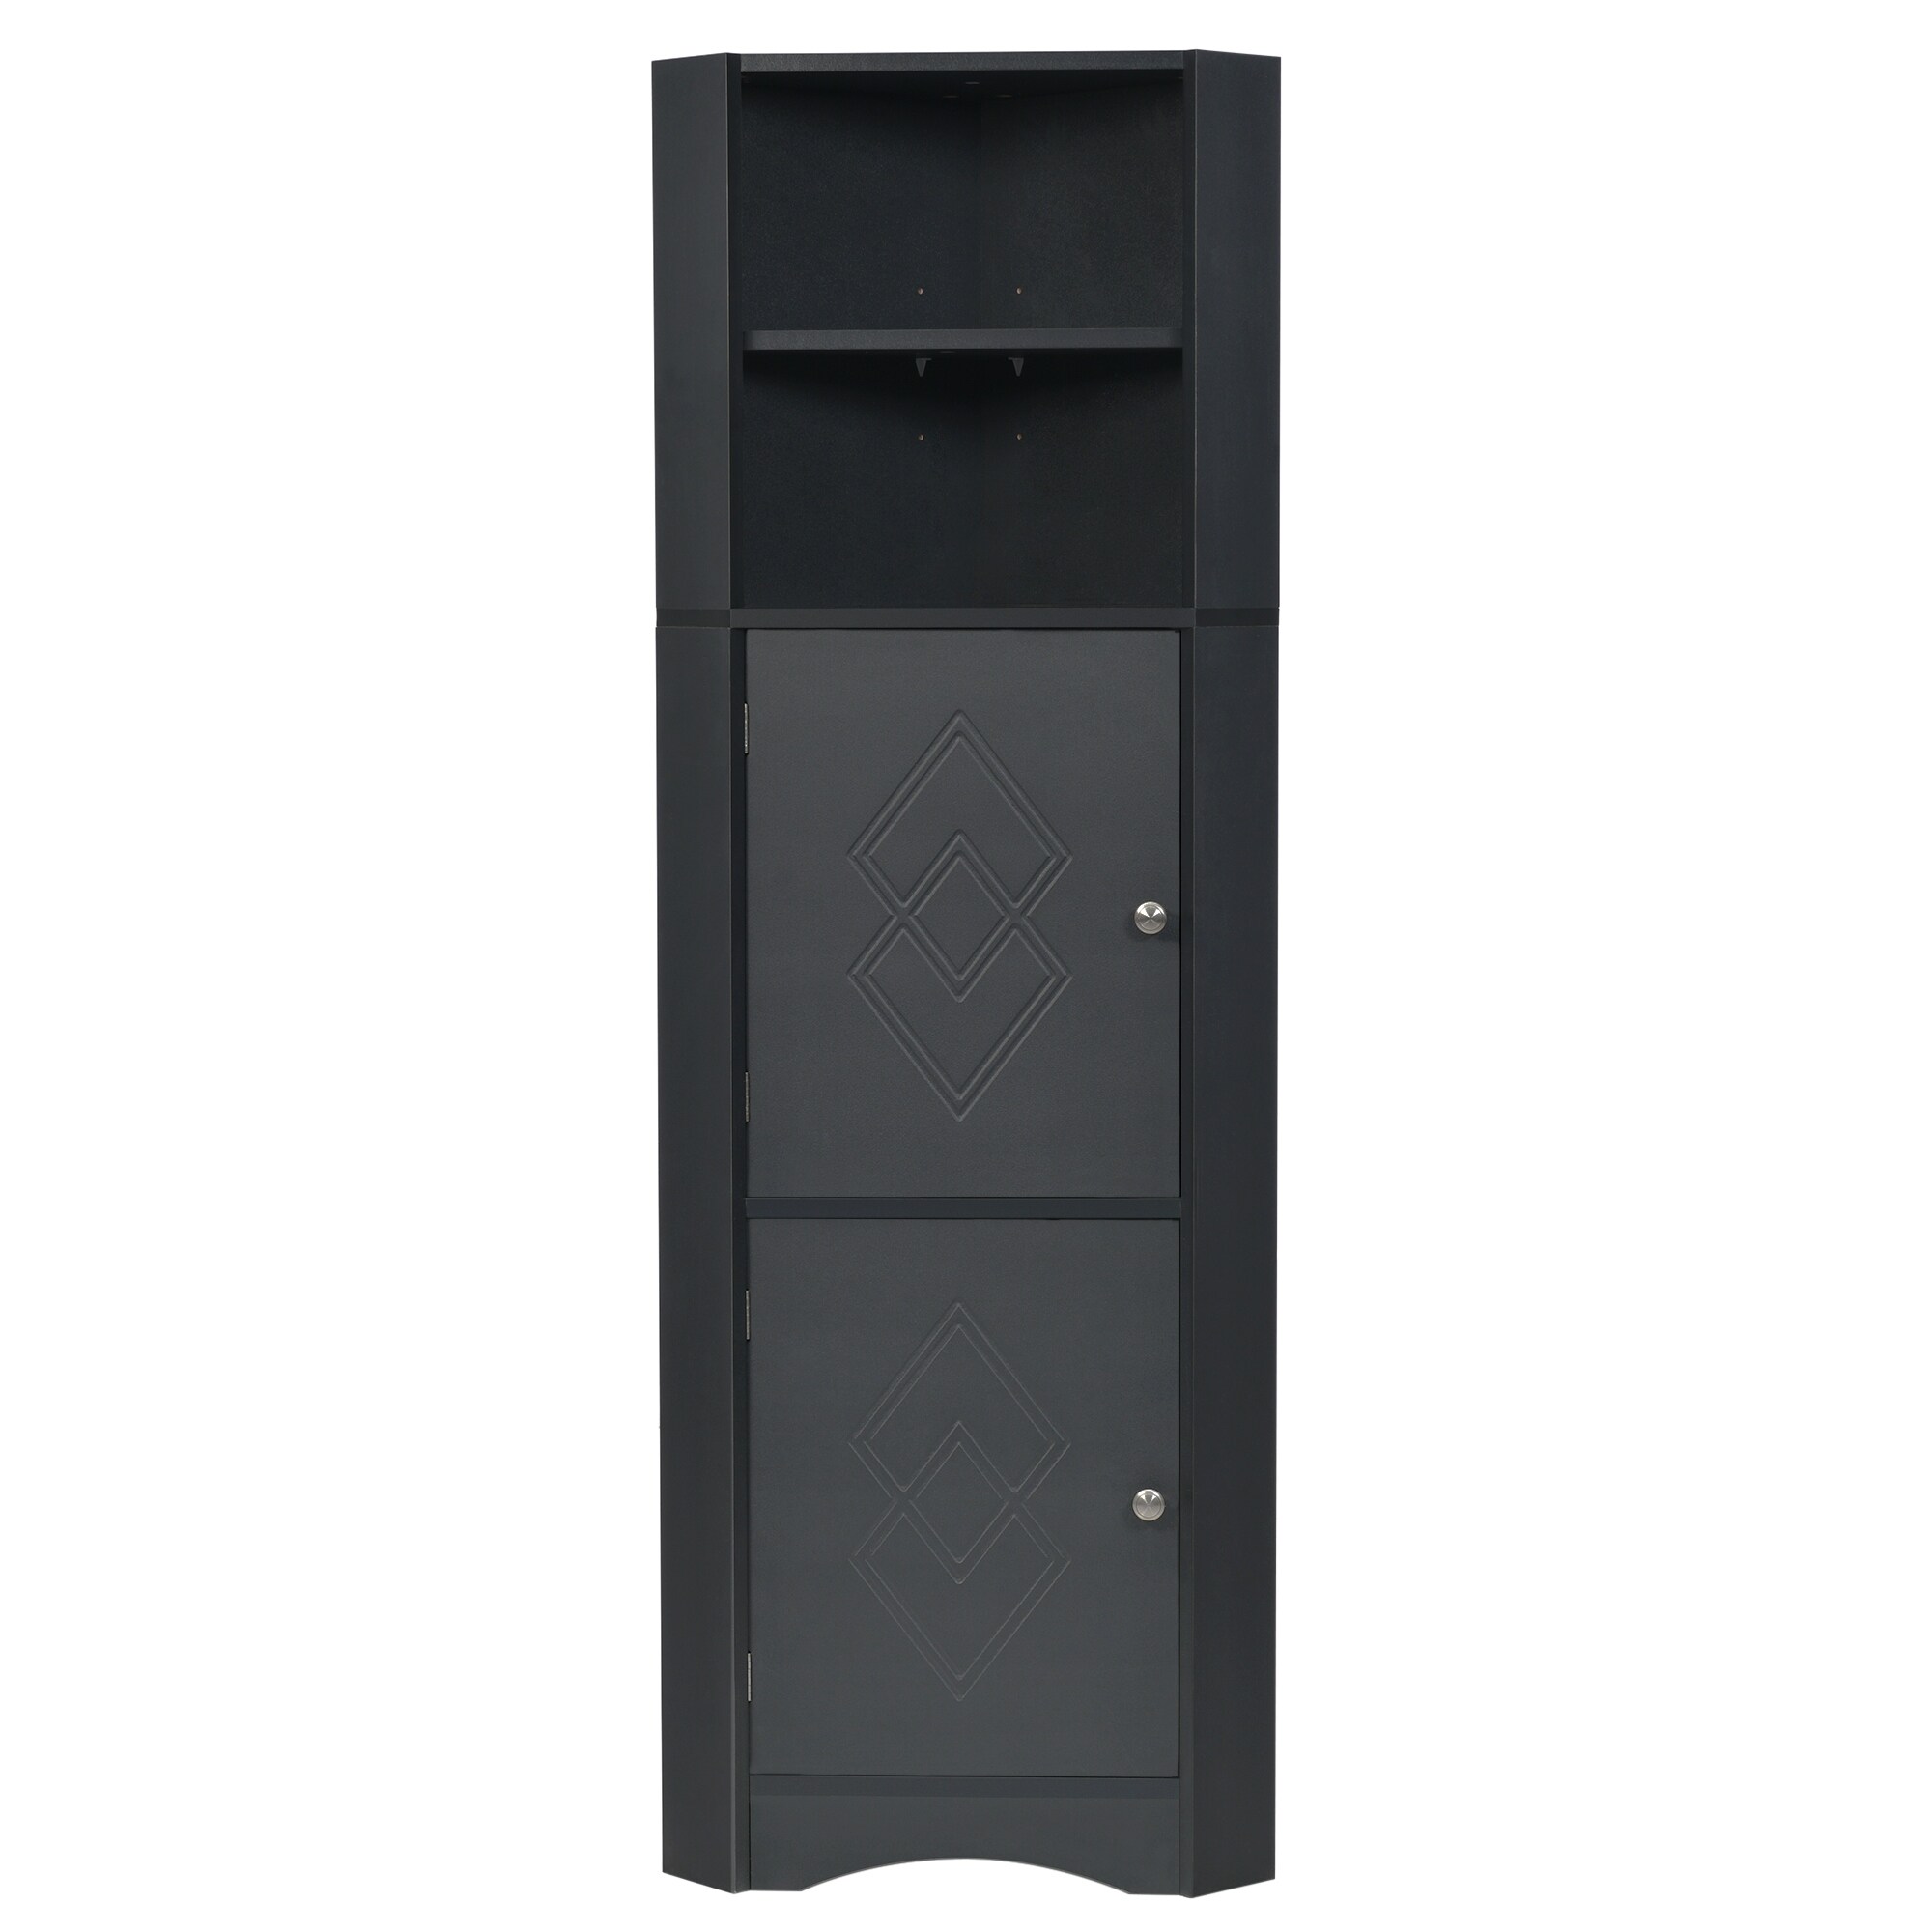 https://ak1.ostkcdn.com/images/products/is/images/direct/1a850b8b40f3c6fd368b5b92adf58140823b6476/Free-Standing-Corner-Storage-Cabinet-Waterproof-Gap-Storage-Rack-for-Bathroom%2C-Triangle-Bathroom-Cabinet-with-Adjustable-Shelf.jpg